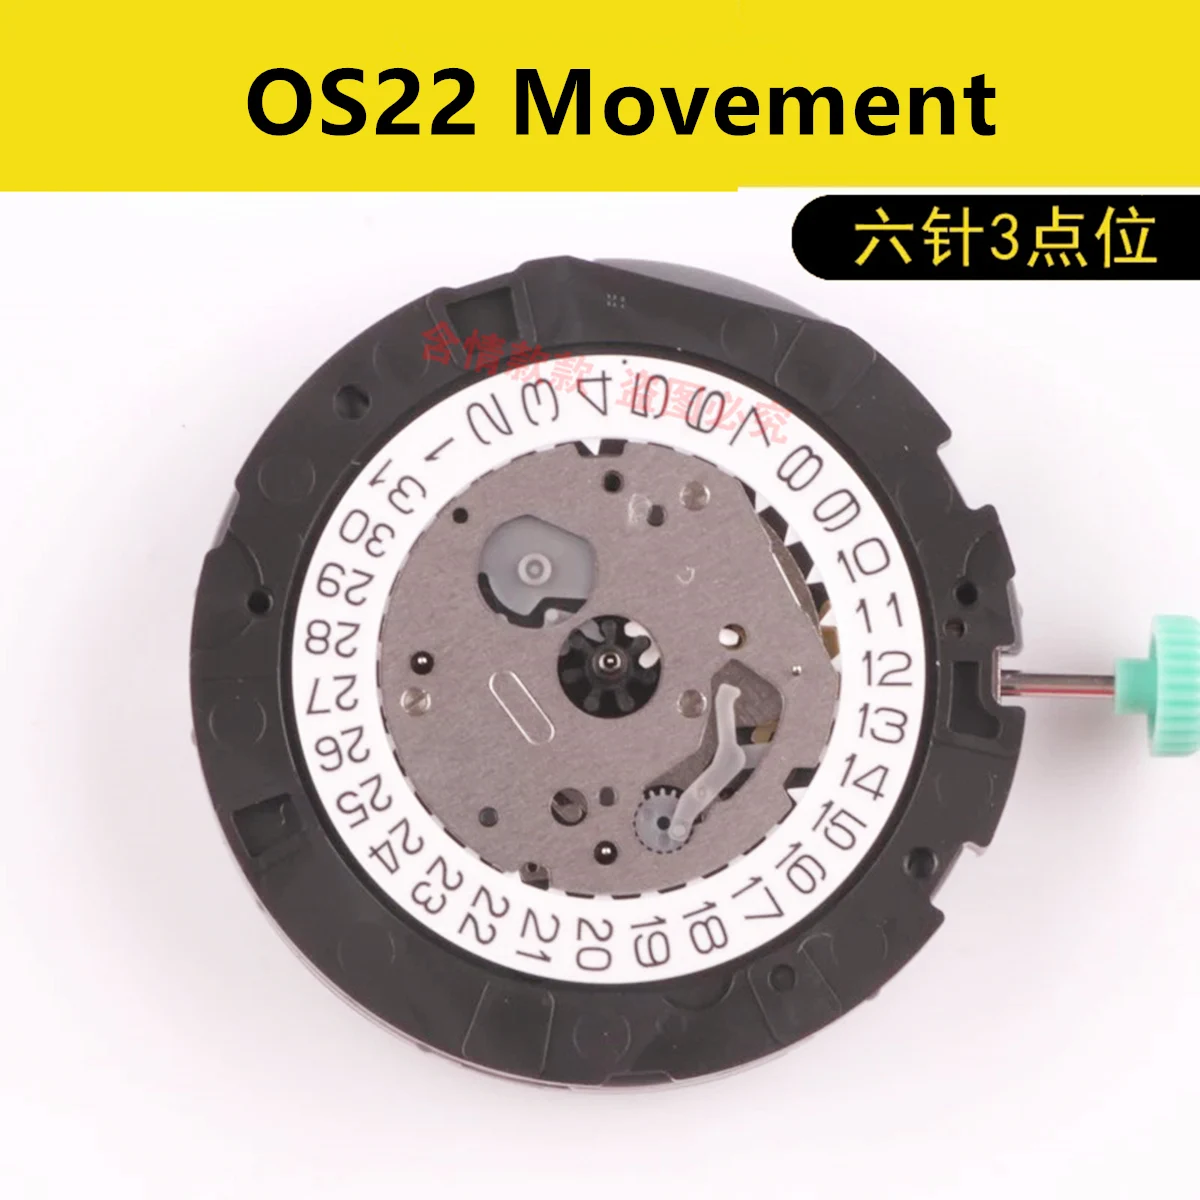 apan Miyota OS22 Quartz Watch Movement With Adjust Stem 6 pins Date at 3 Replace Repair | Наручные часы